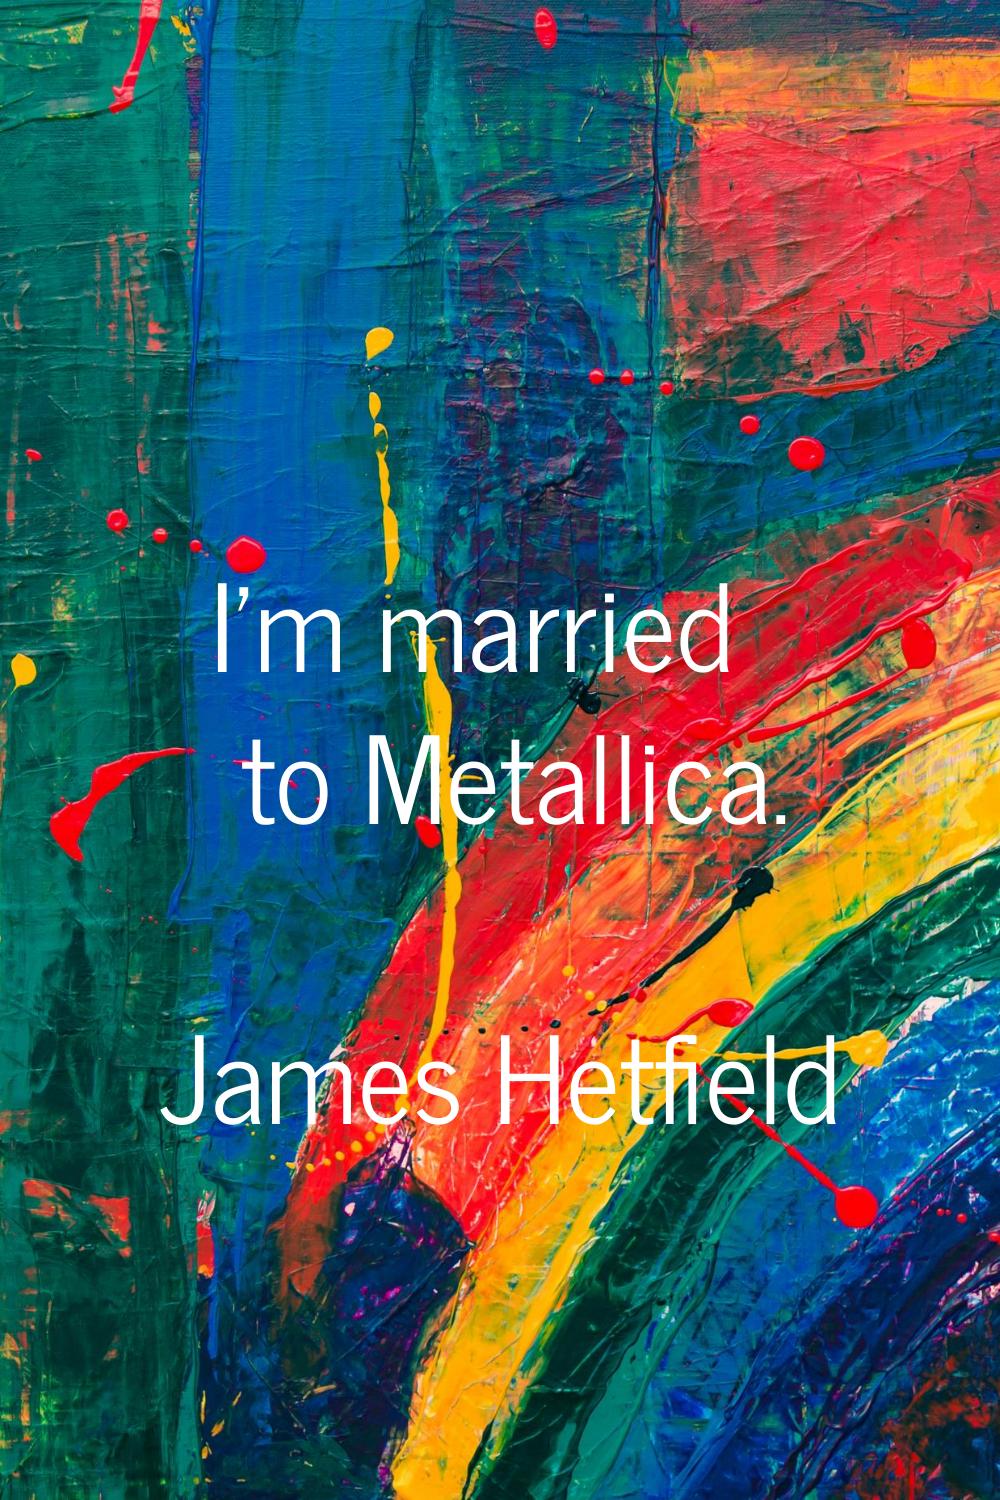 I'm married to Metallica.